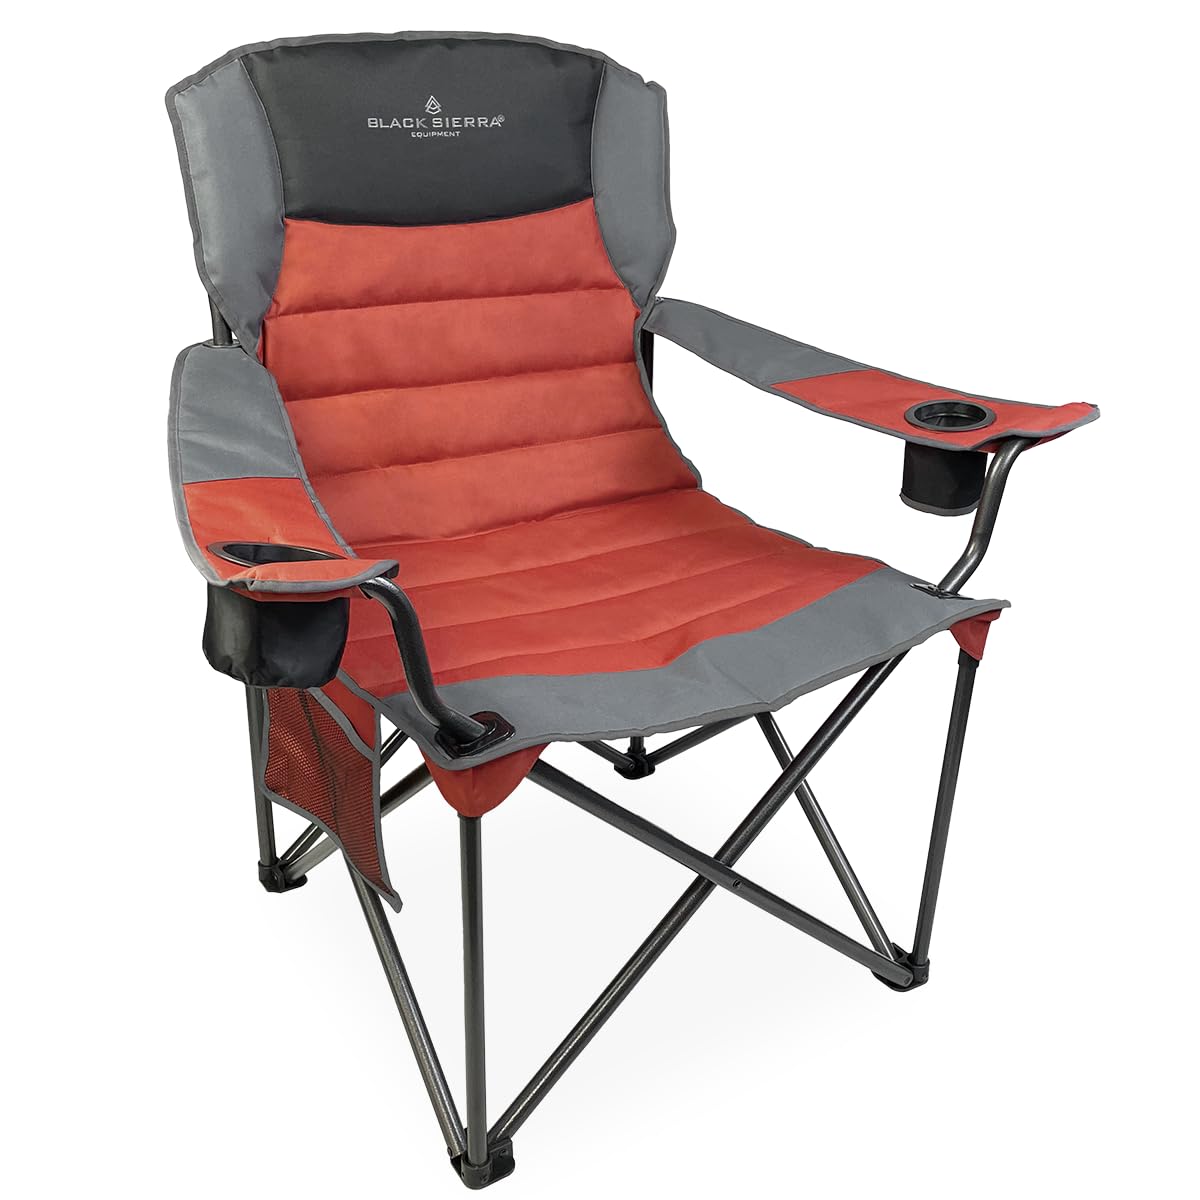 Black Sierra Oversize XL Camping Chair